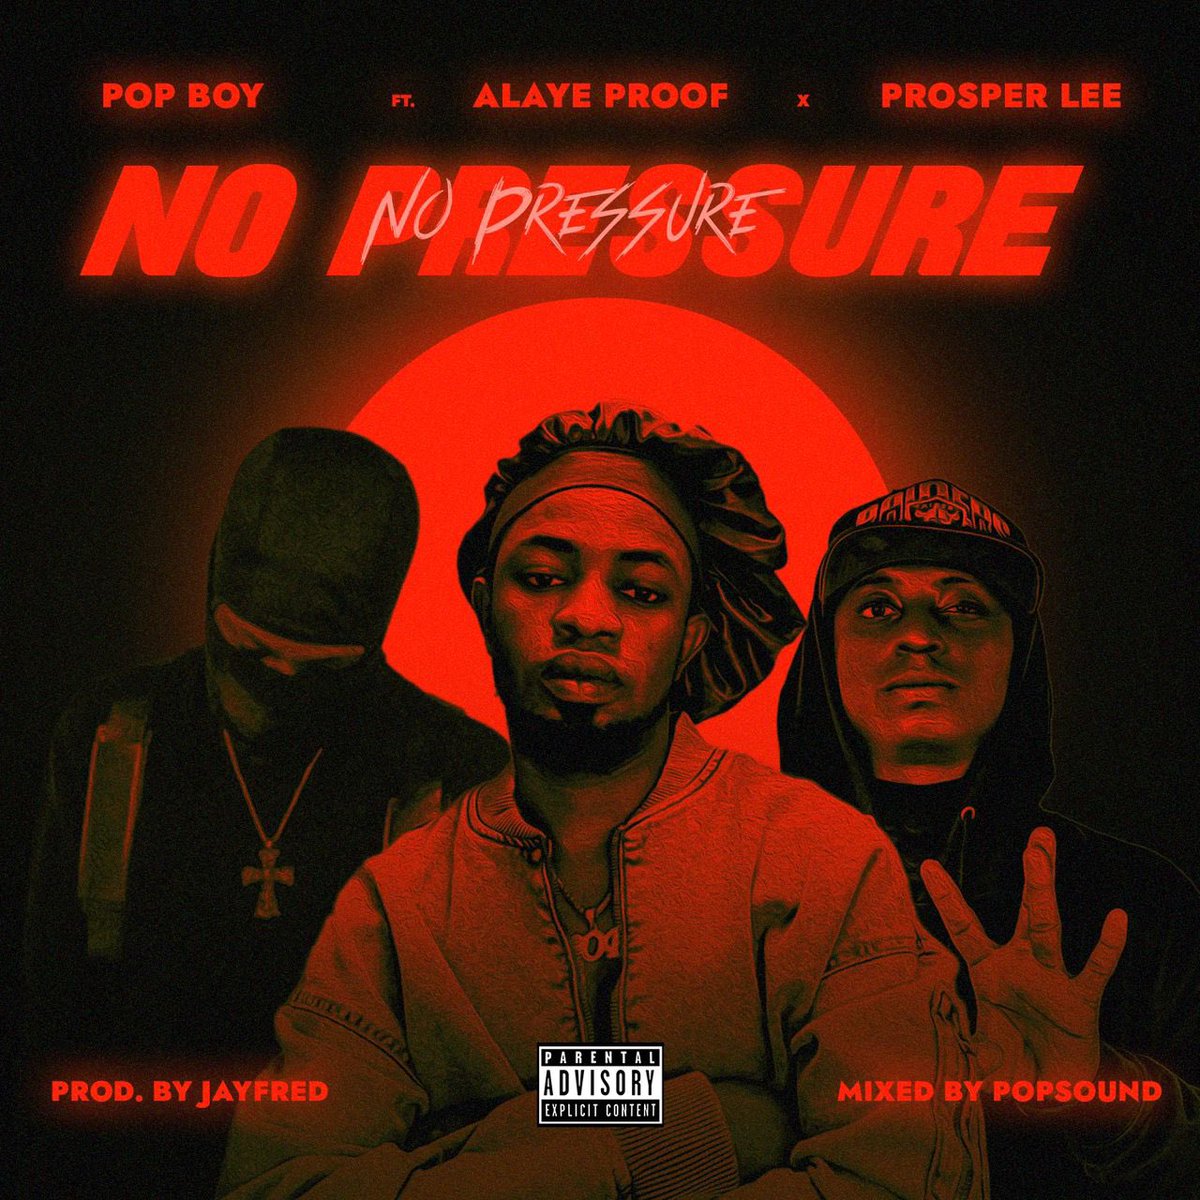 #Np No Pressure - by @officialpopboy ft @Iamalayeproof x @Prosperlee151 
#FridayMusicBreak 

#TGIFriday
#TuneInNow
#GoodVibezOnly

cc @djibkbaggy